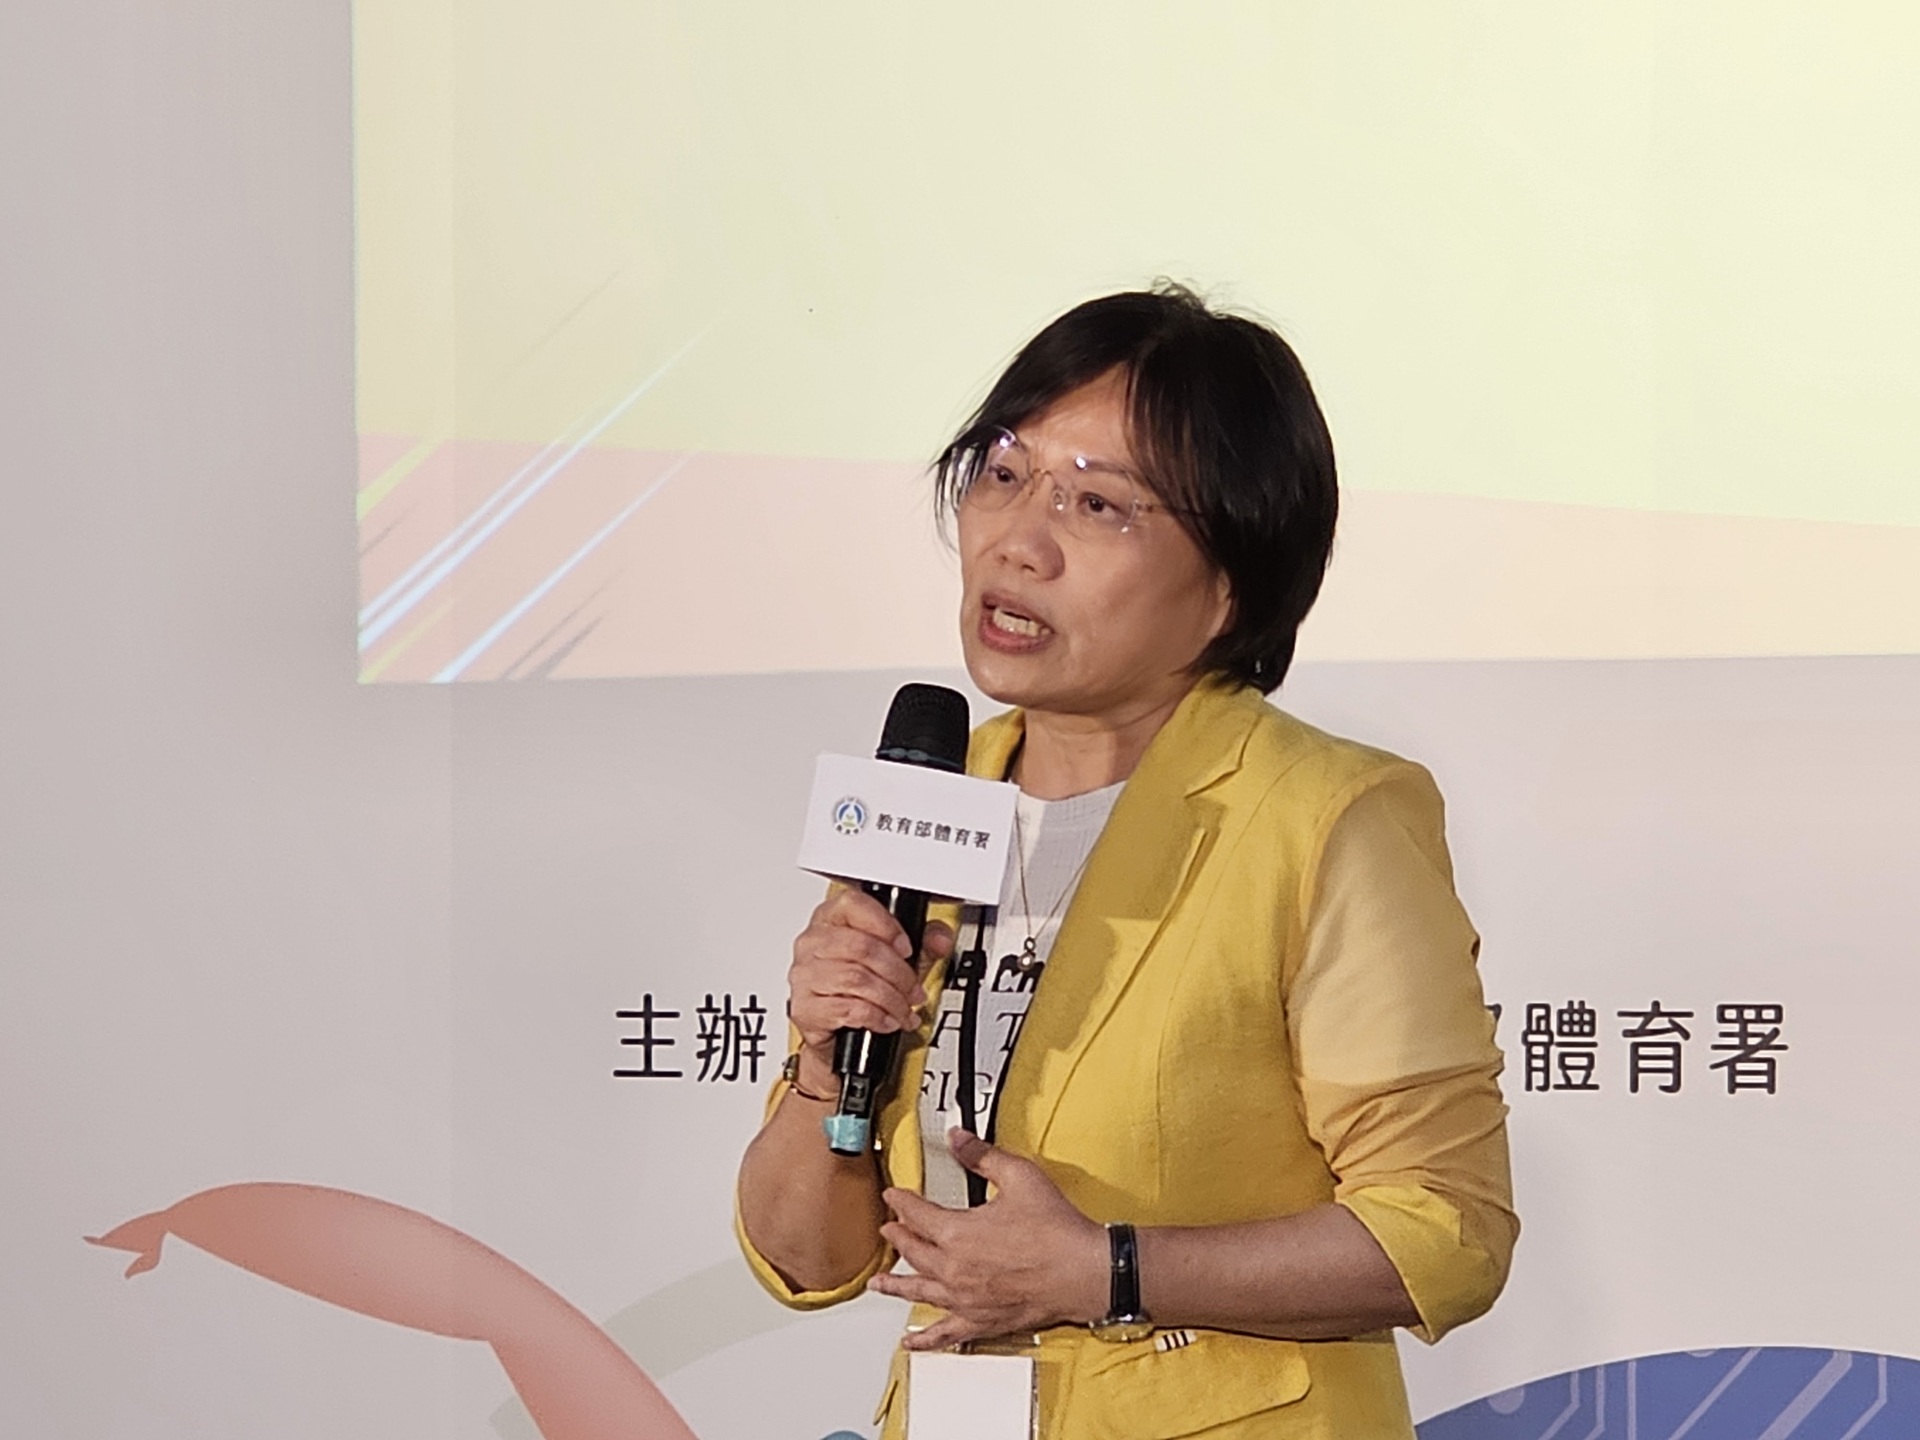 Members of Legislative Yuan, Shih-Fang Liu gave a speech